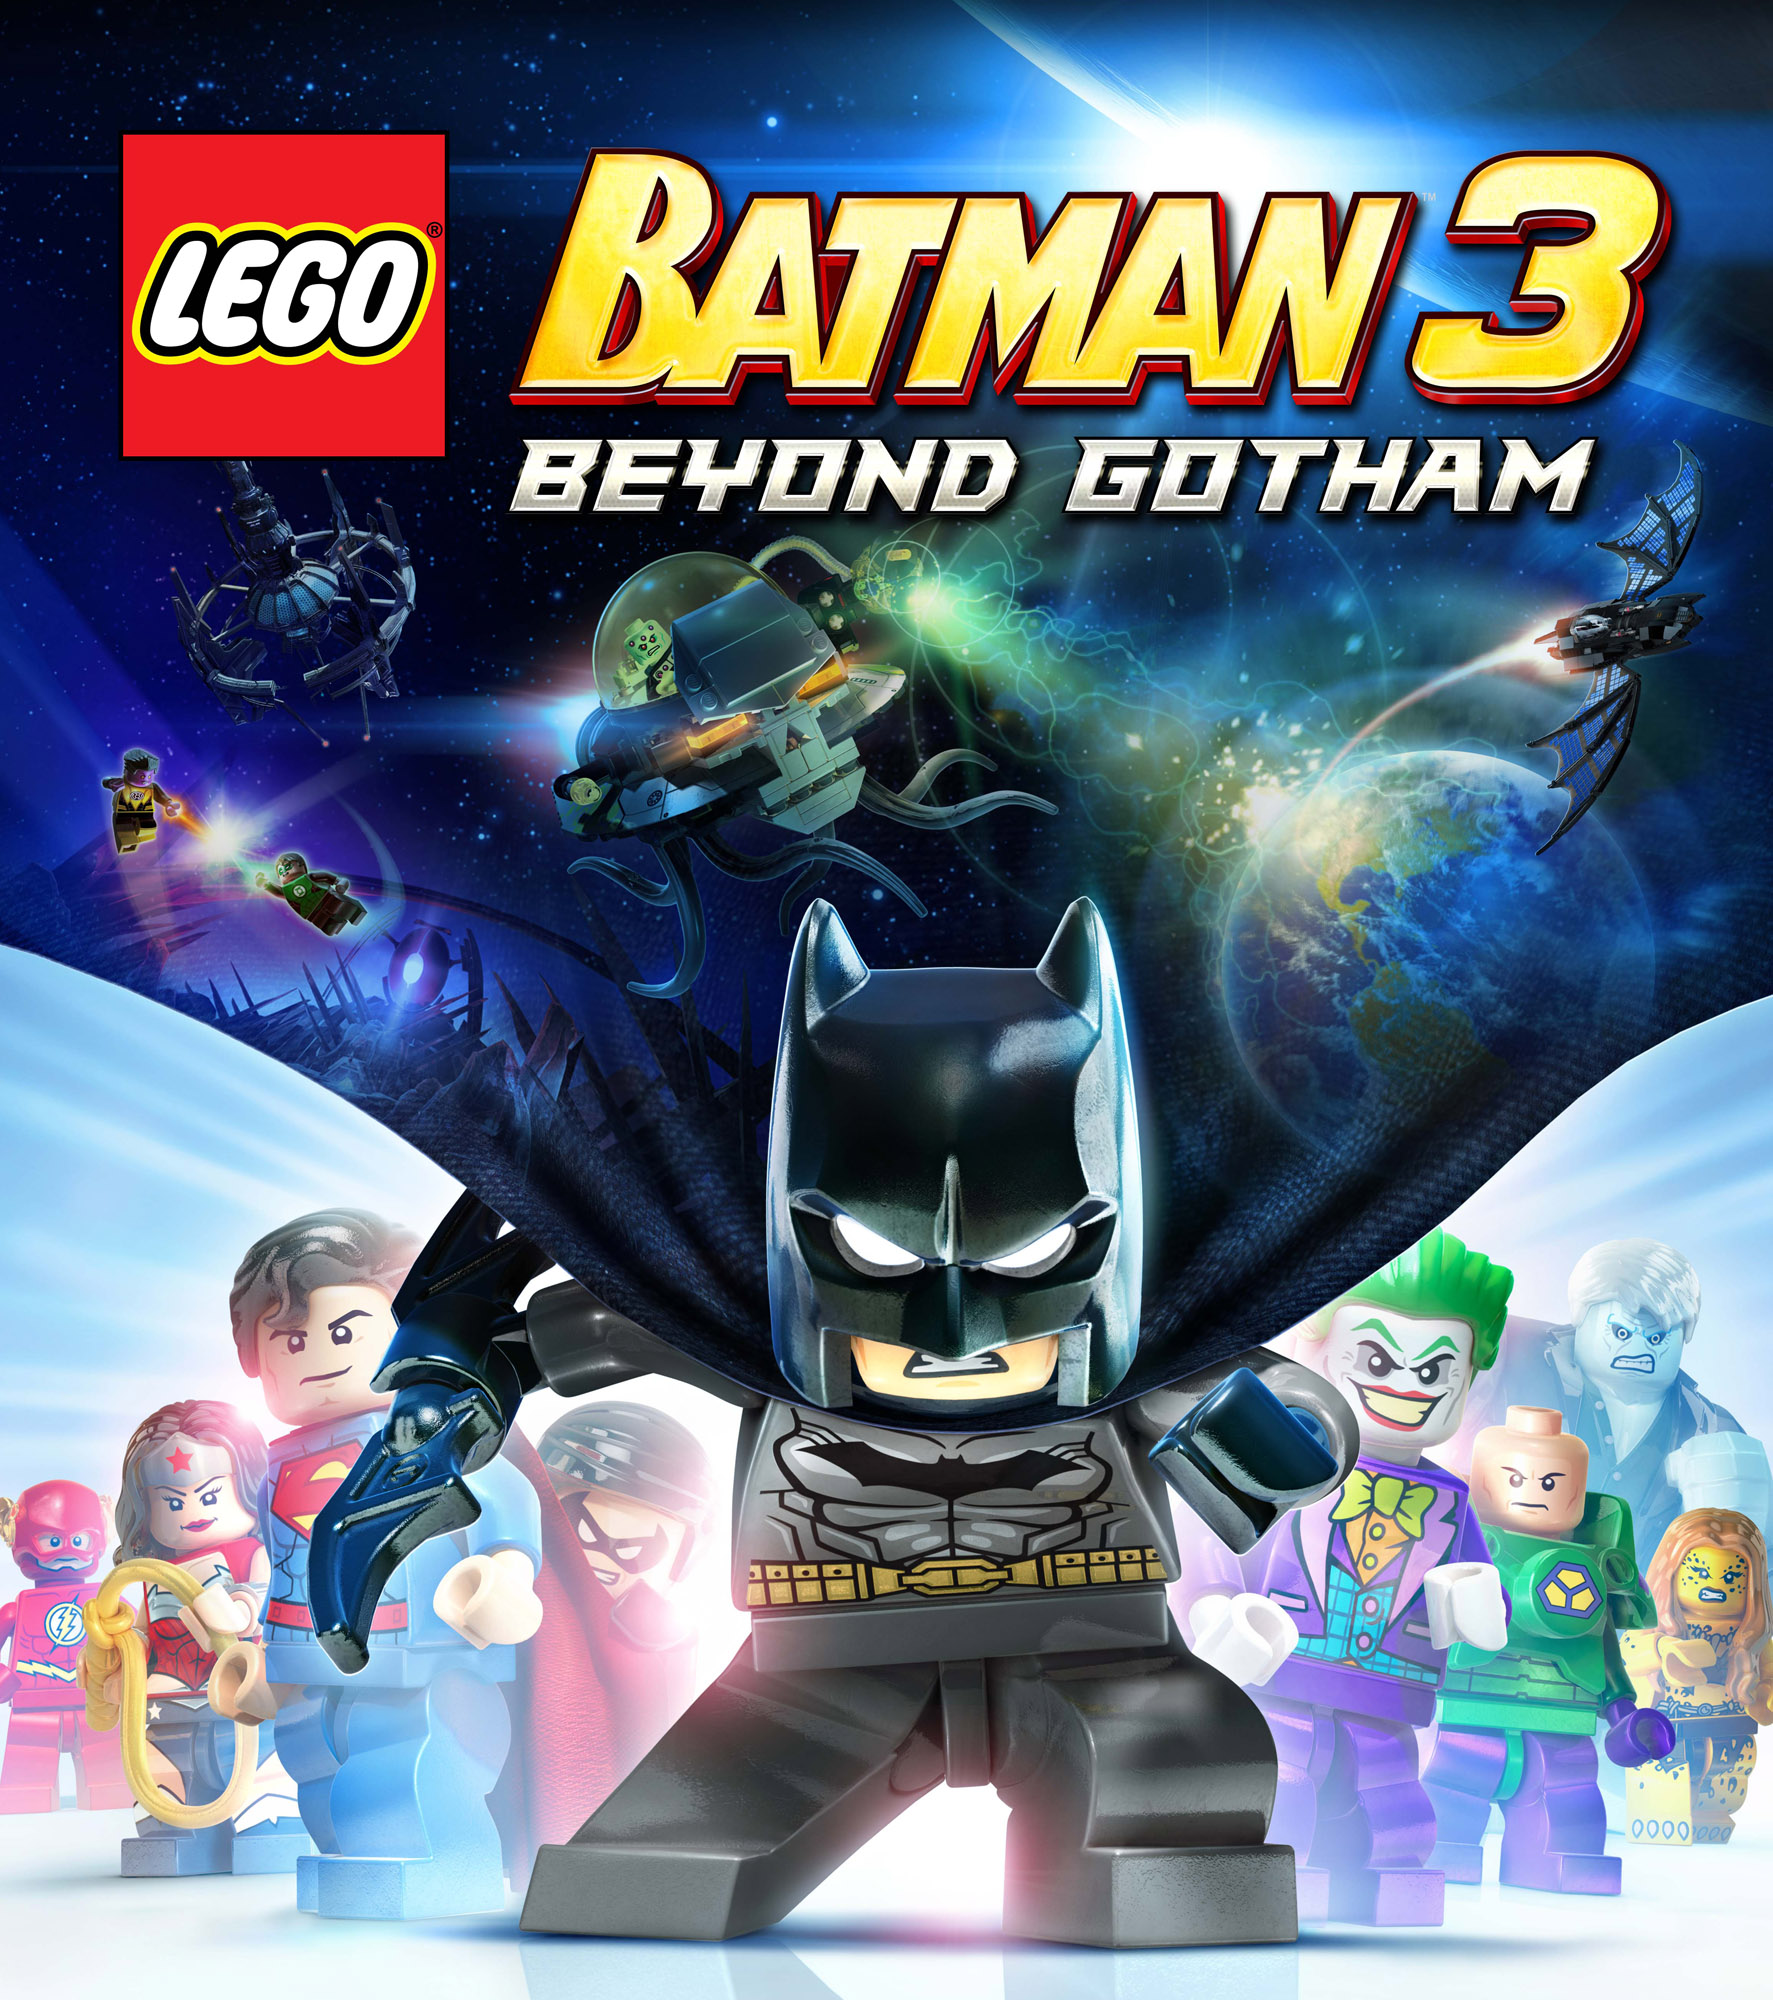 LEGO Batman 3: Beyond Gotham Picture